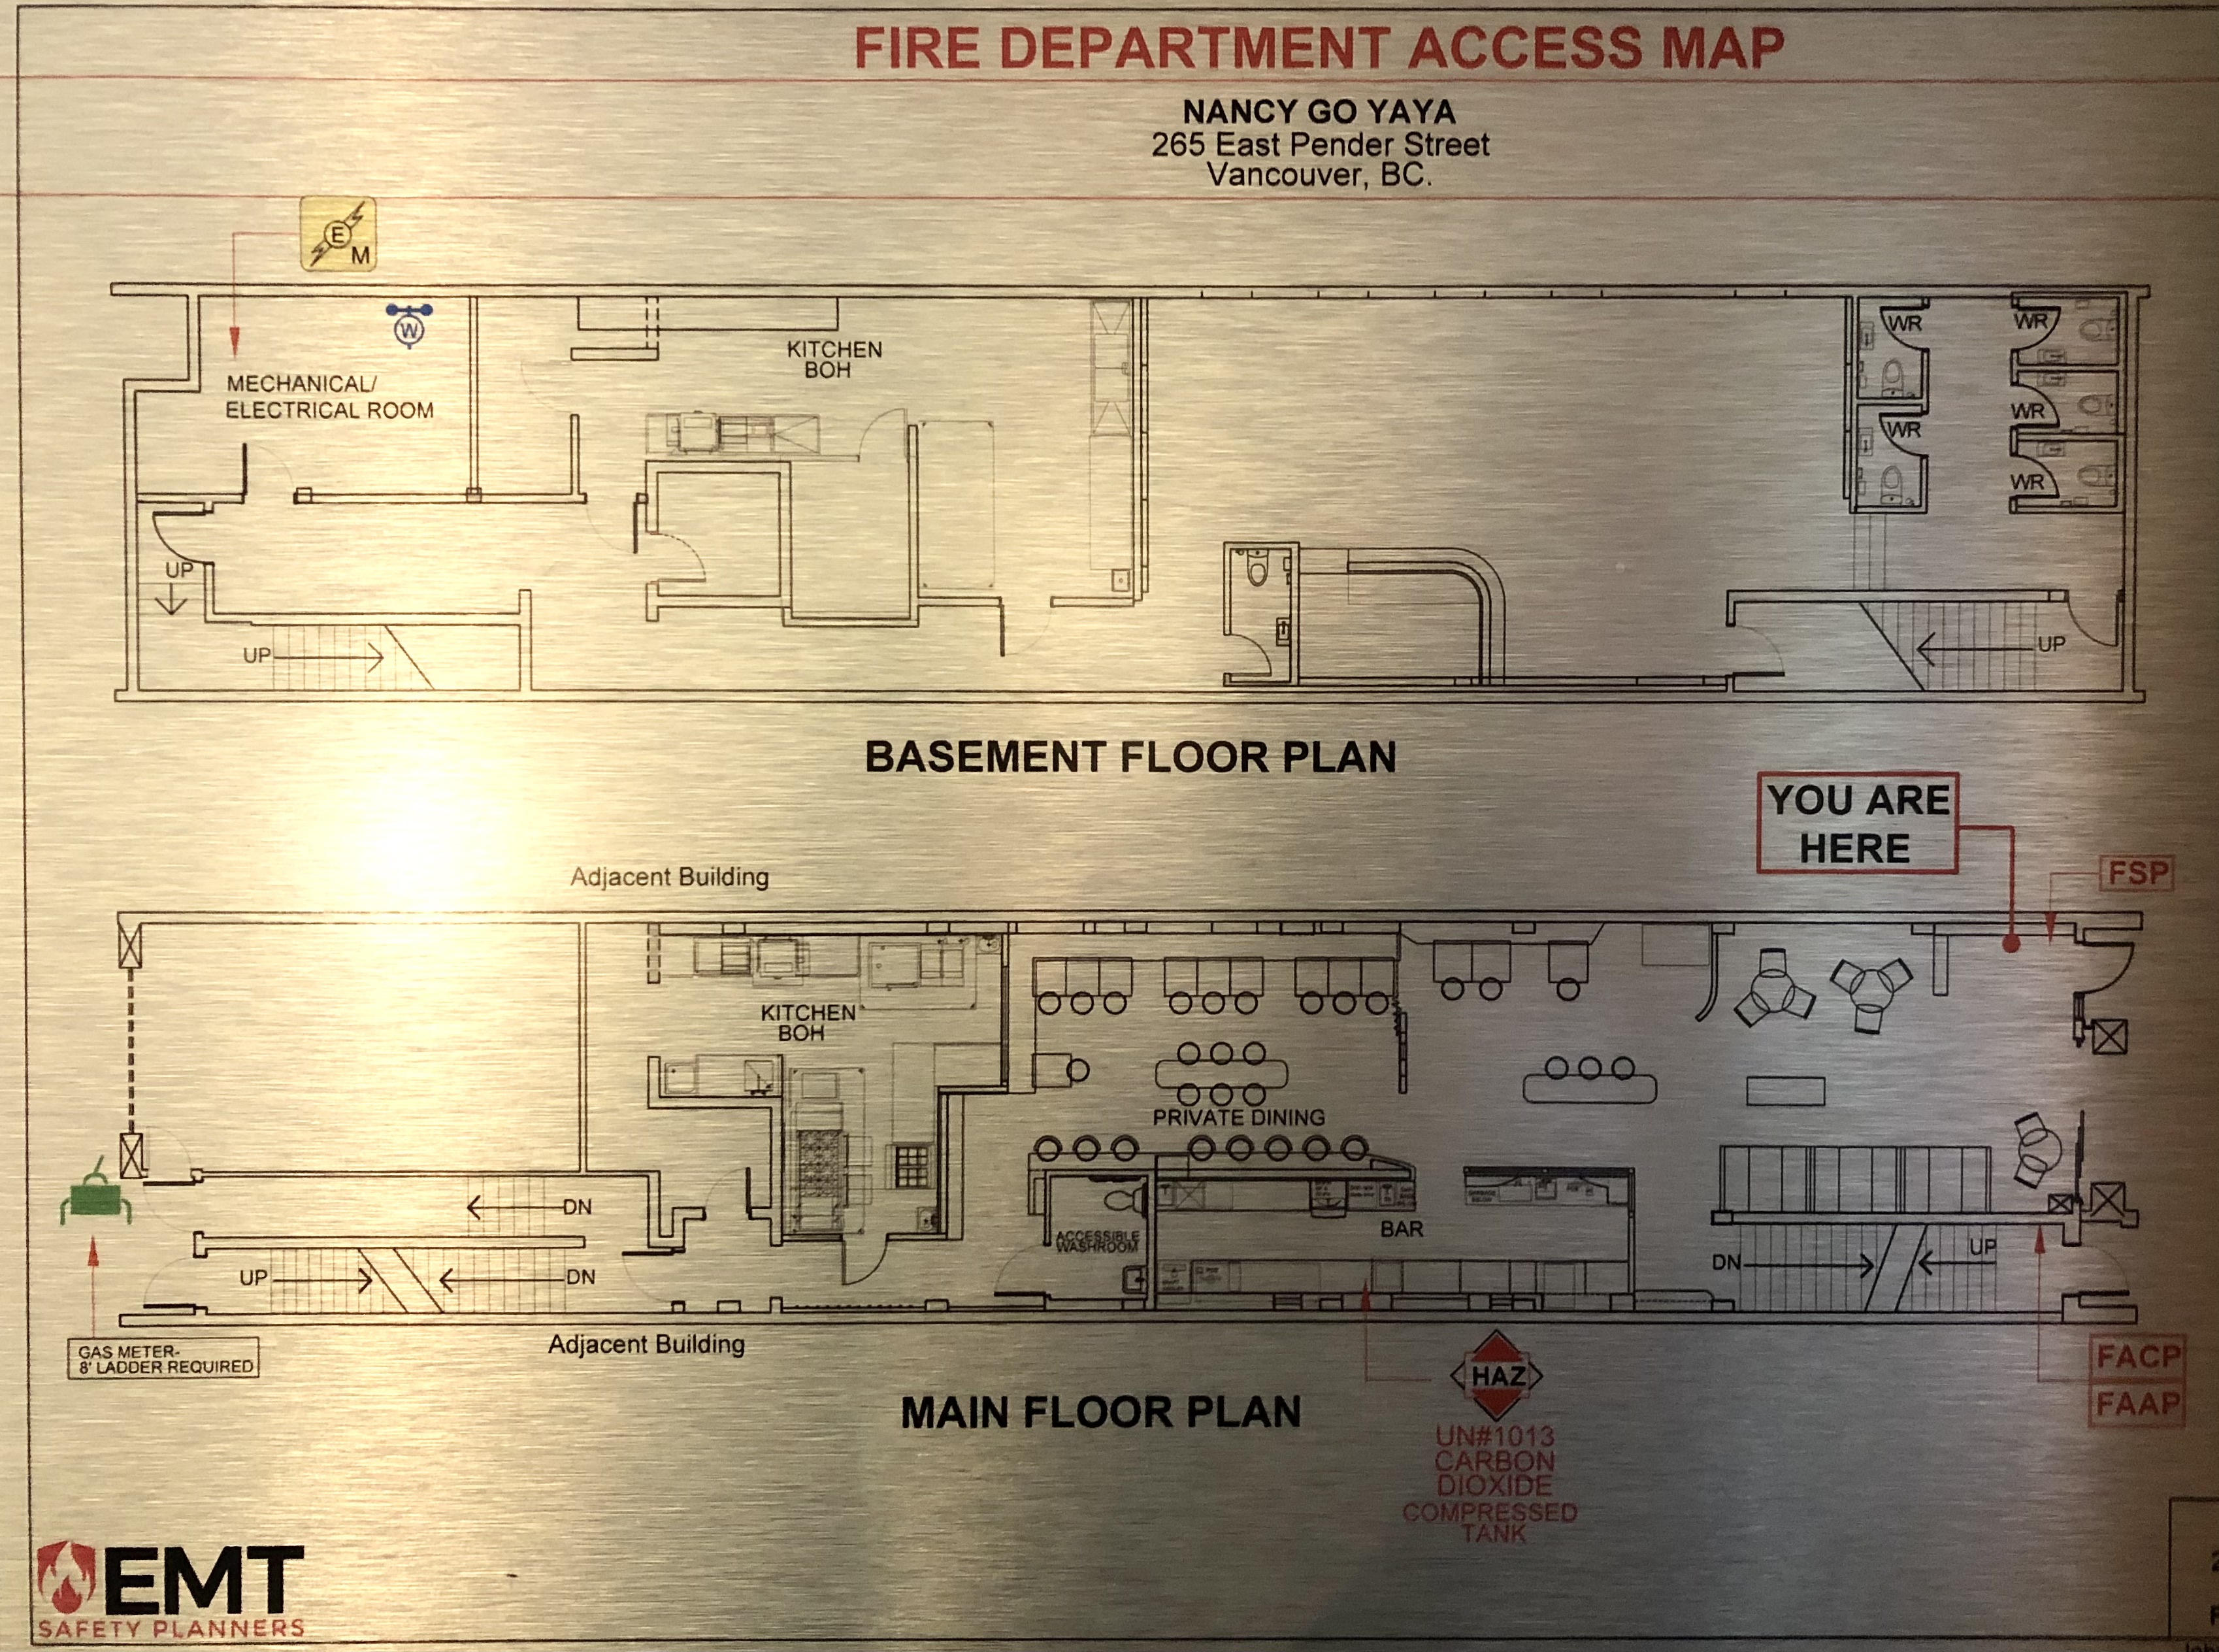 Fire Department Access map of Nancy Go Yaya